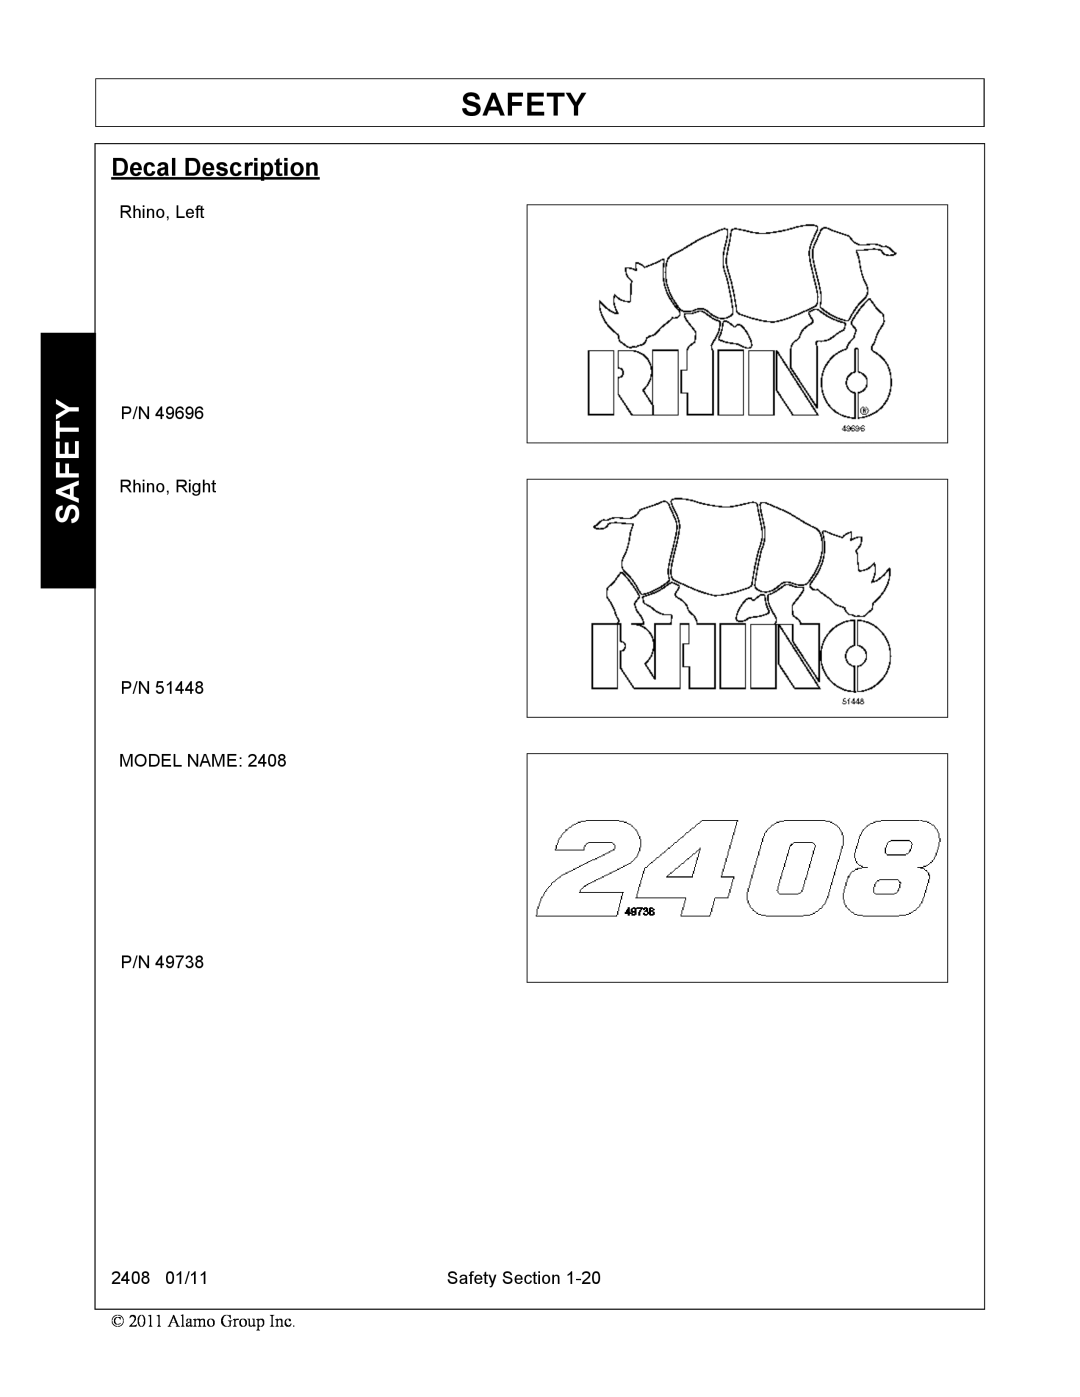 Rhino Mounts 2408 manual Safety, Decal Description 